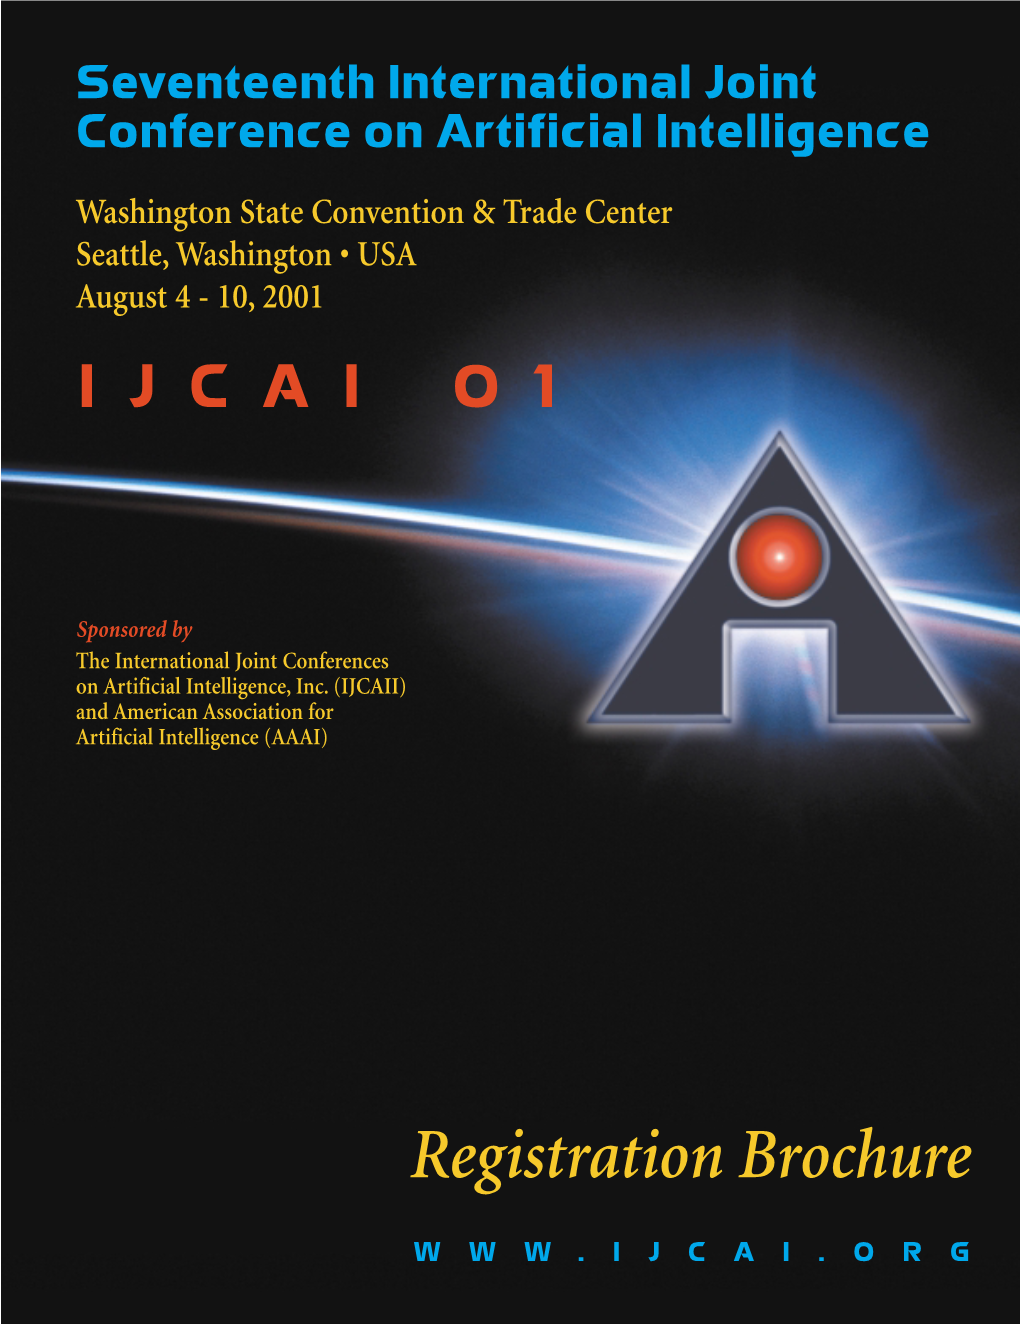 IJCAI-01 Registration Brochure